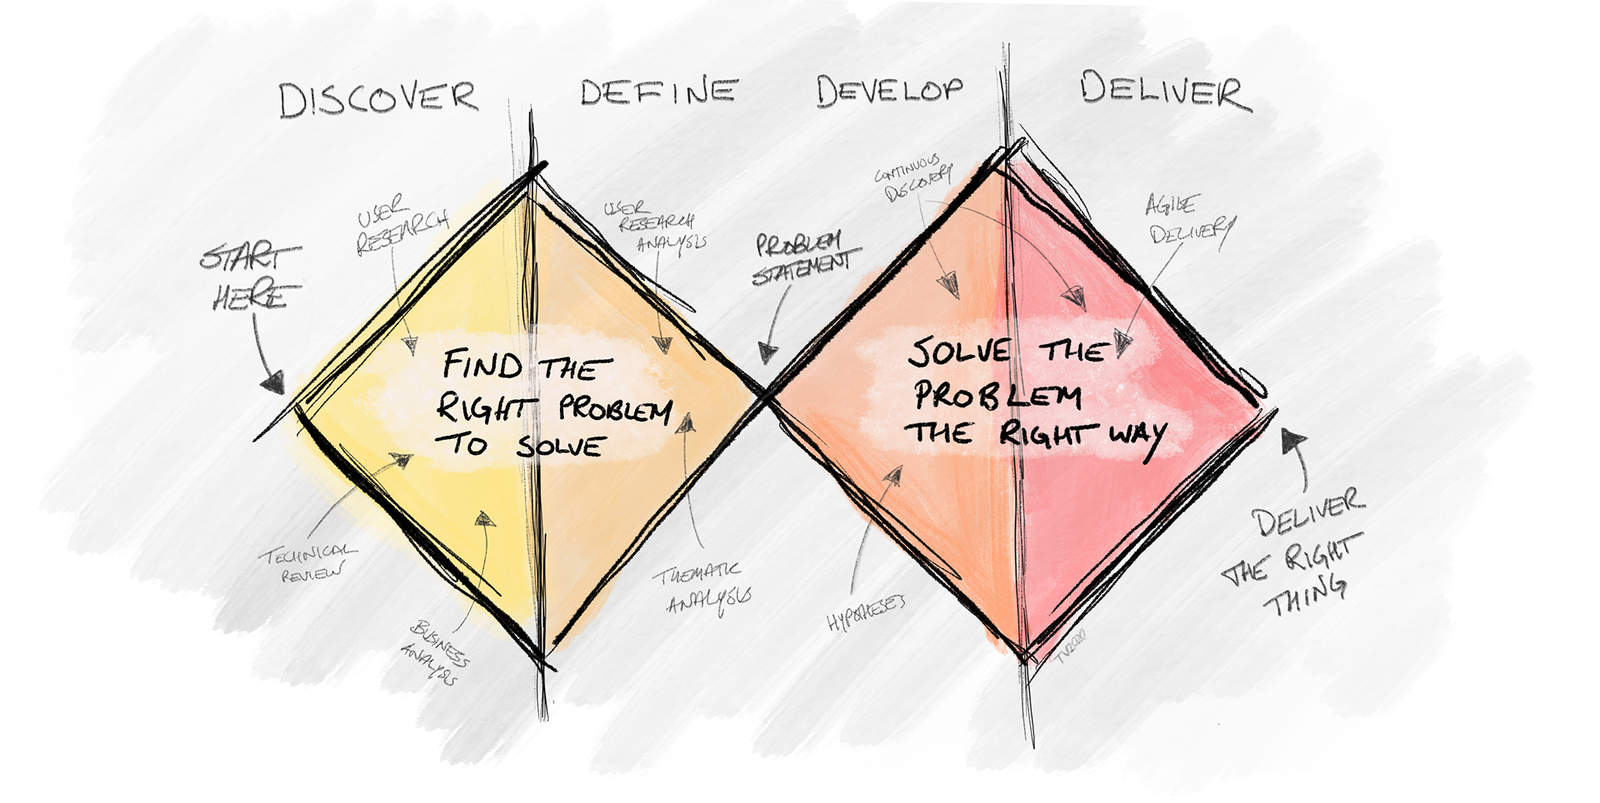 'Double diamond' diagram showing the process of discover - define - develop - deliver when solving  problem.